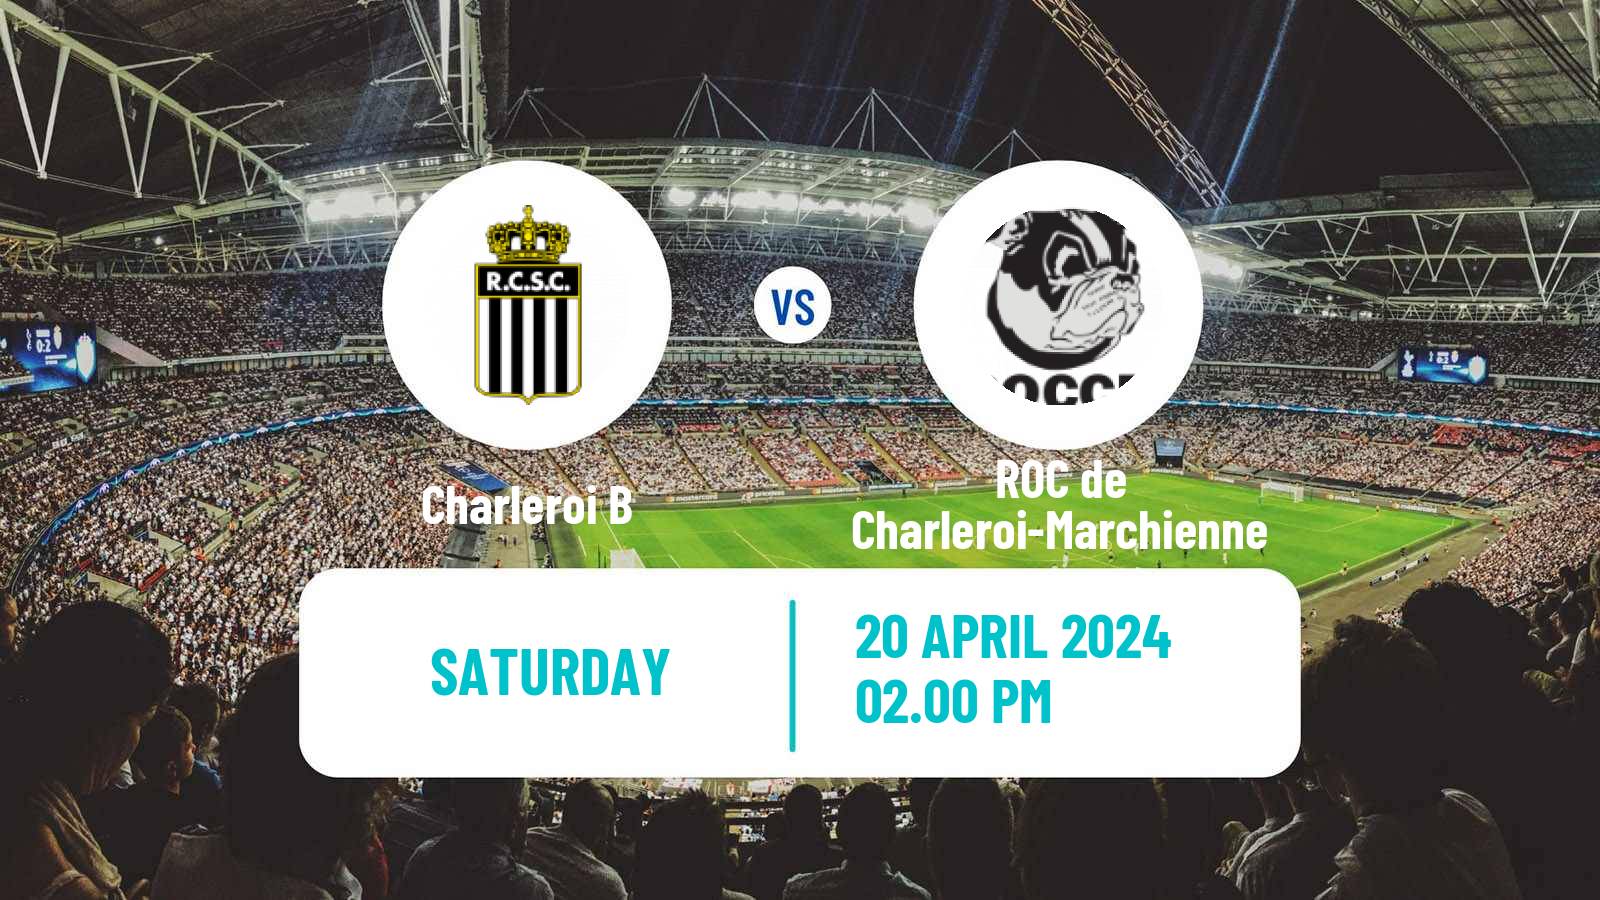 Soccer Belgian National Division 1 Charleroi B - ROC de Charleroi-Marchienne